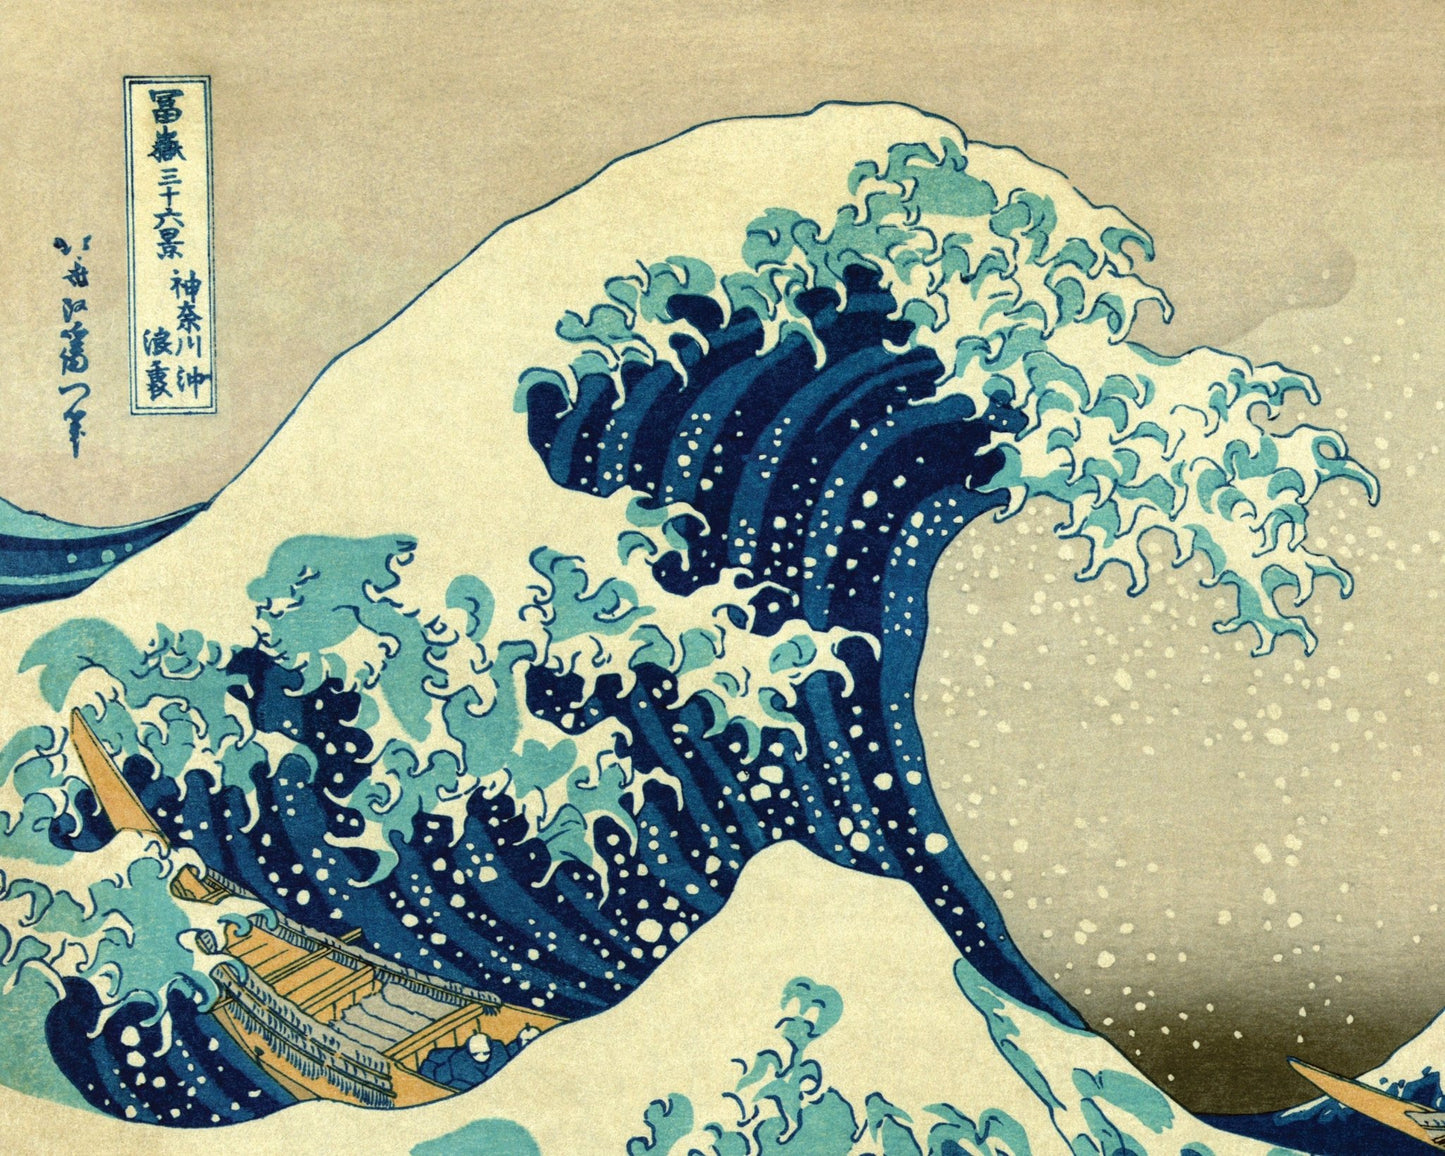 Katsushika Hokusai "The Great Wave off Kanagawa" (c.1829 - 1833) - Mabon Gallery